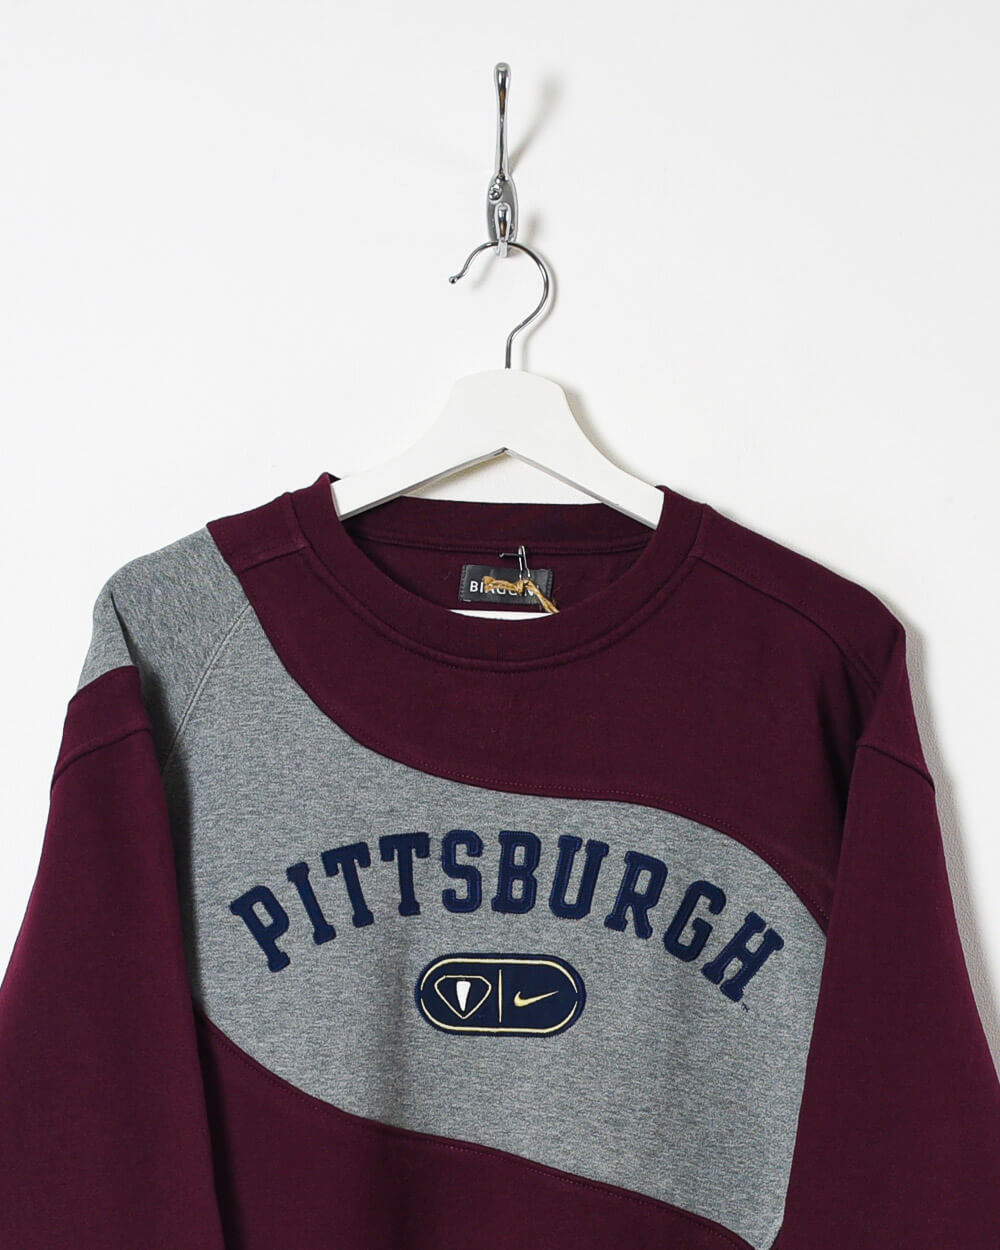 Maroon Nike Rework Pittsburgh Sweatshirt - X-Large